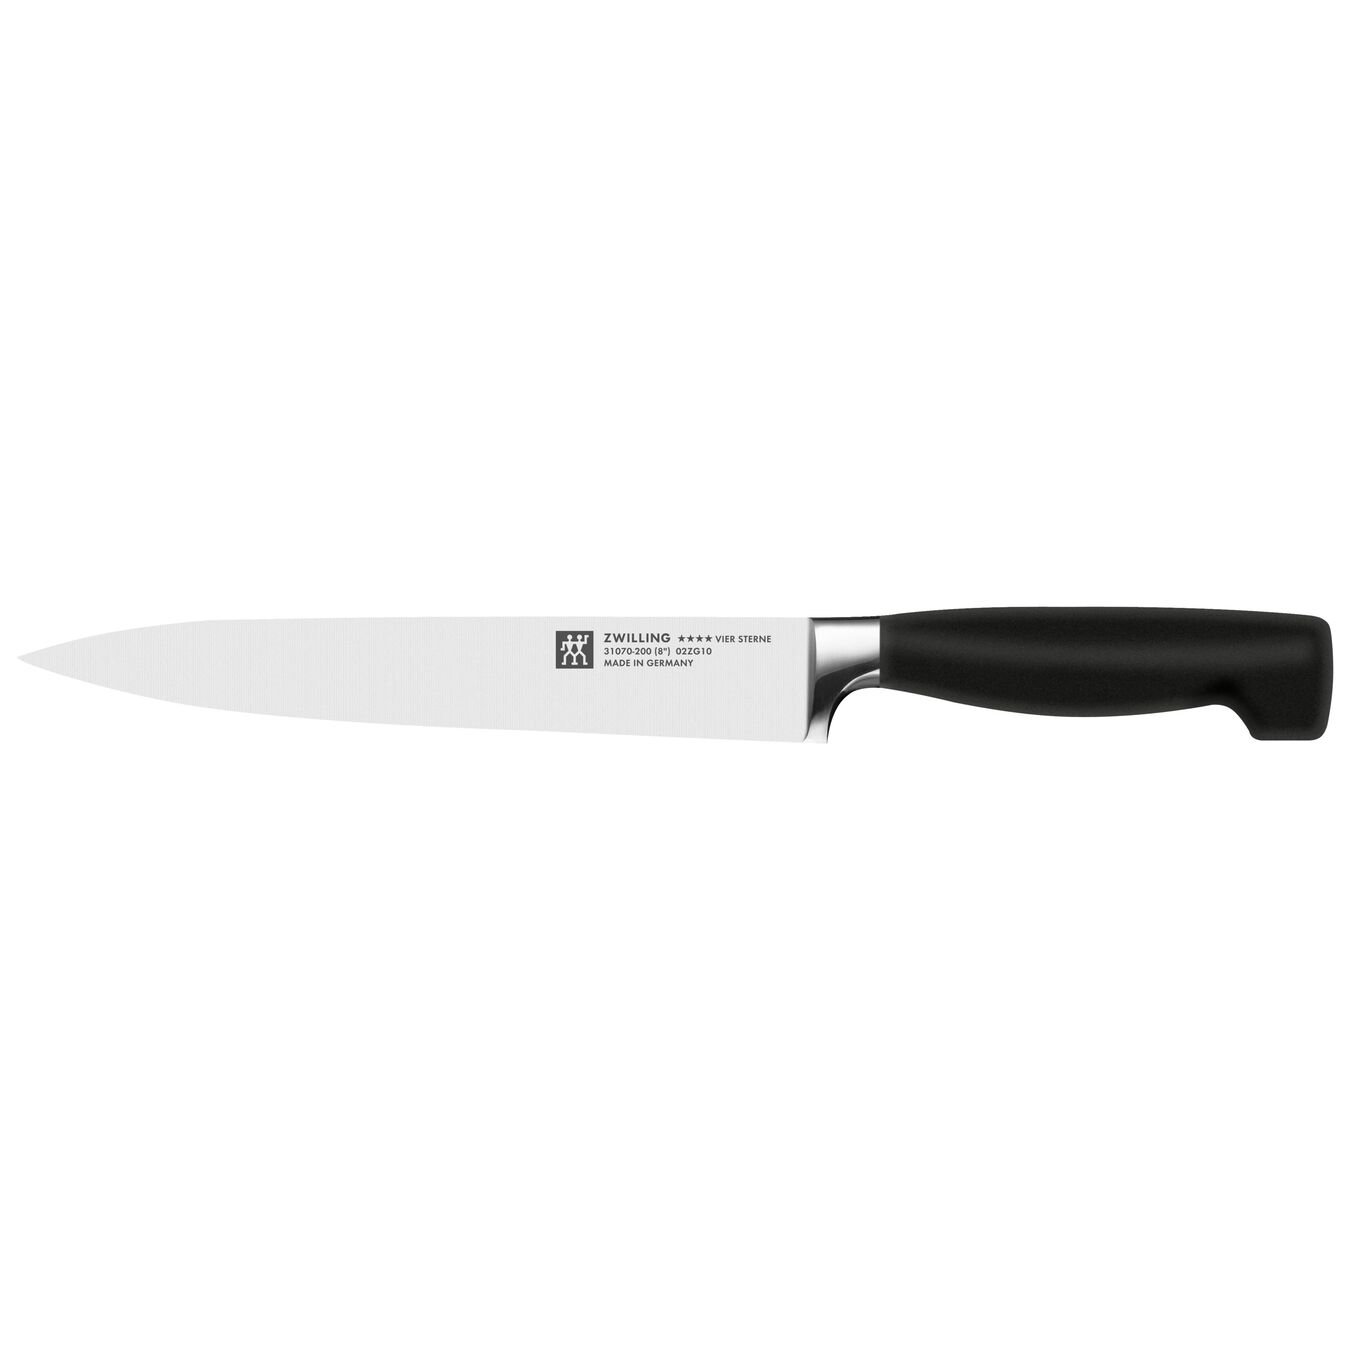 7-pcs brown Ash Knife block set with KiS technology,,large 9